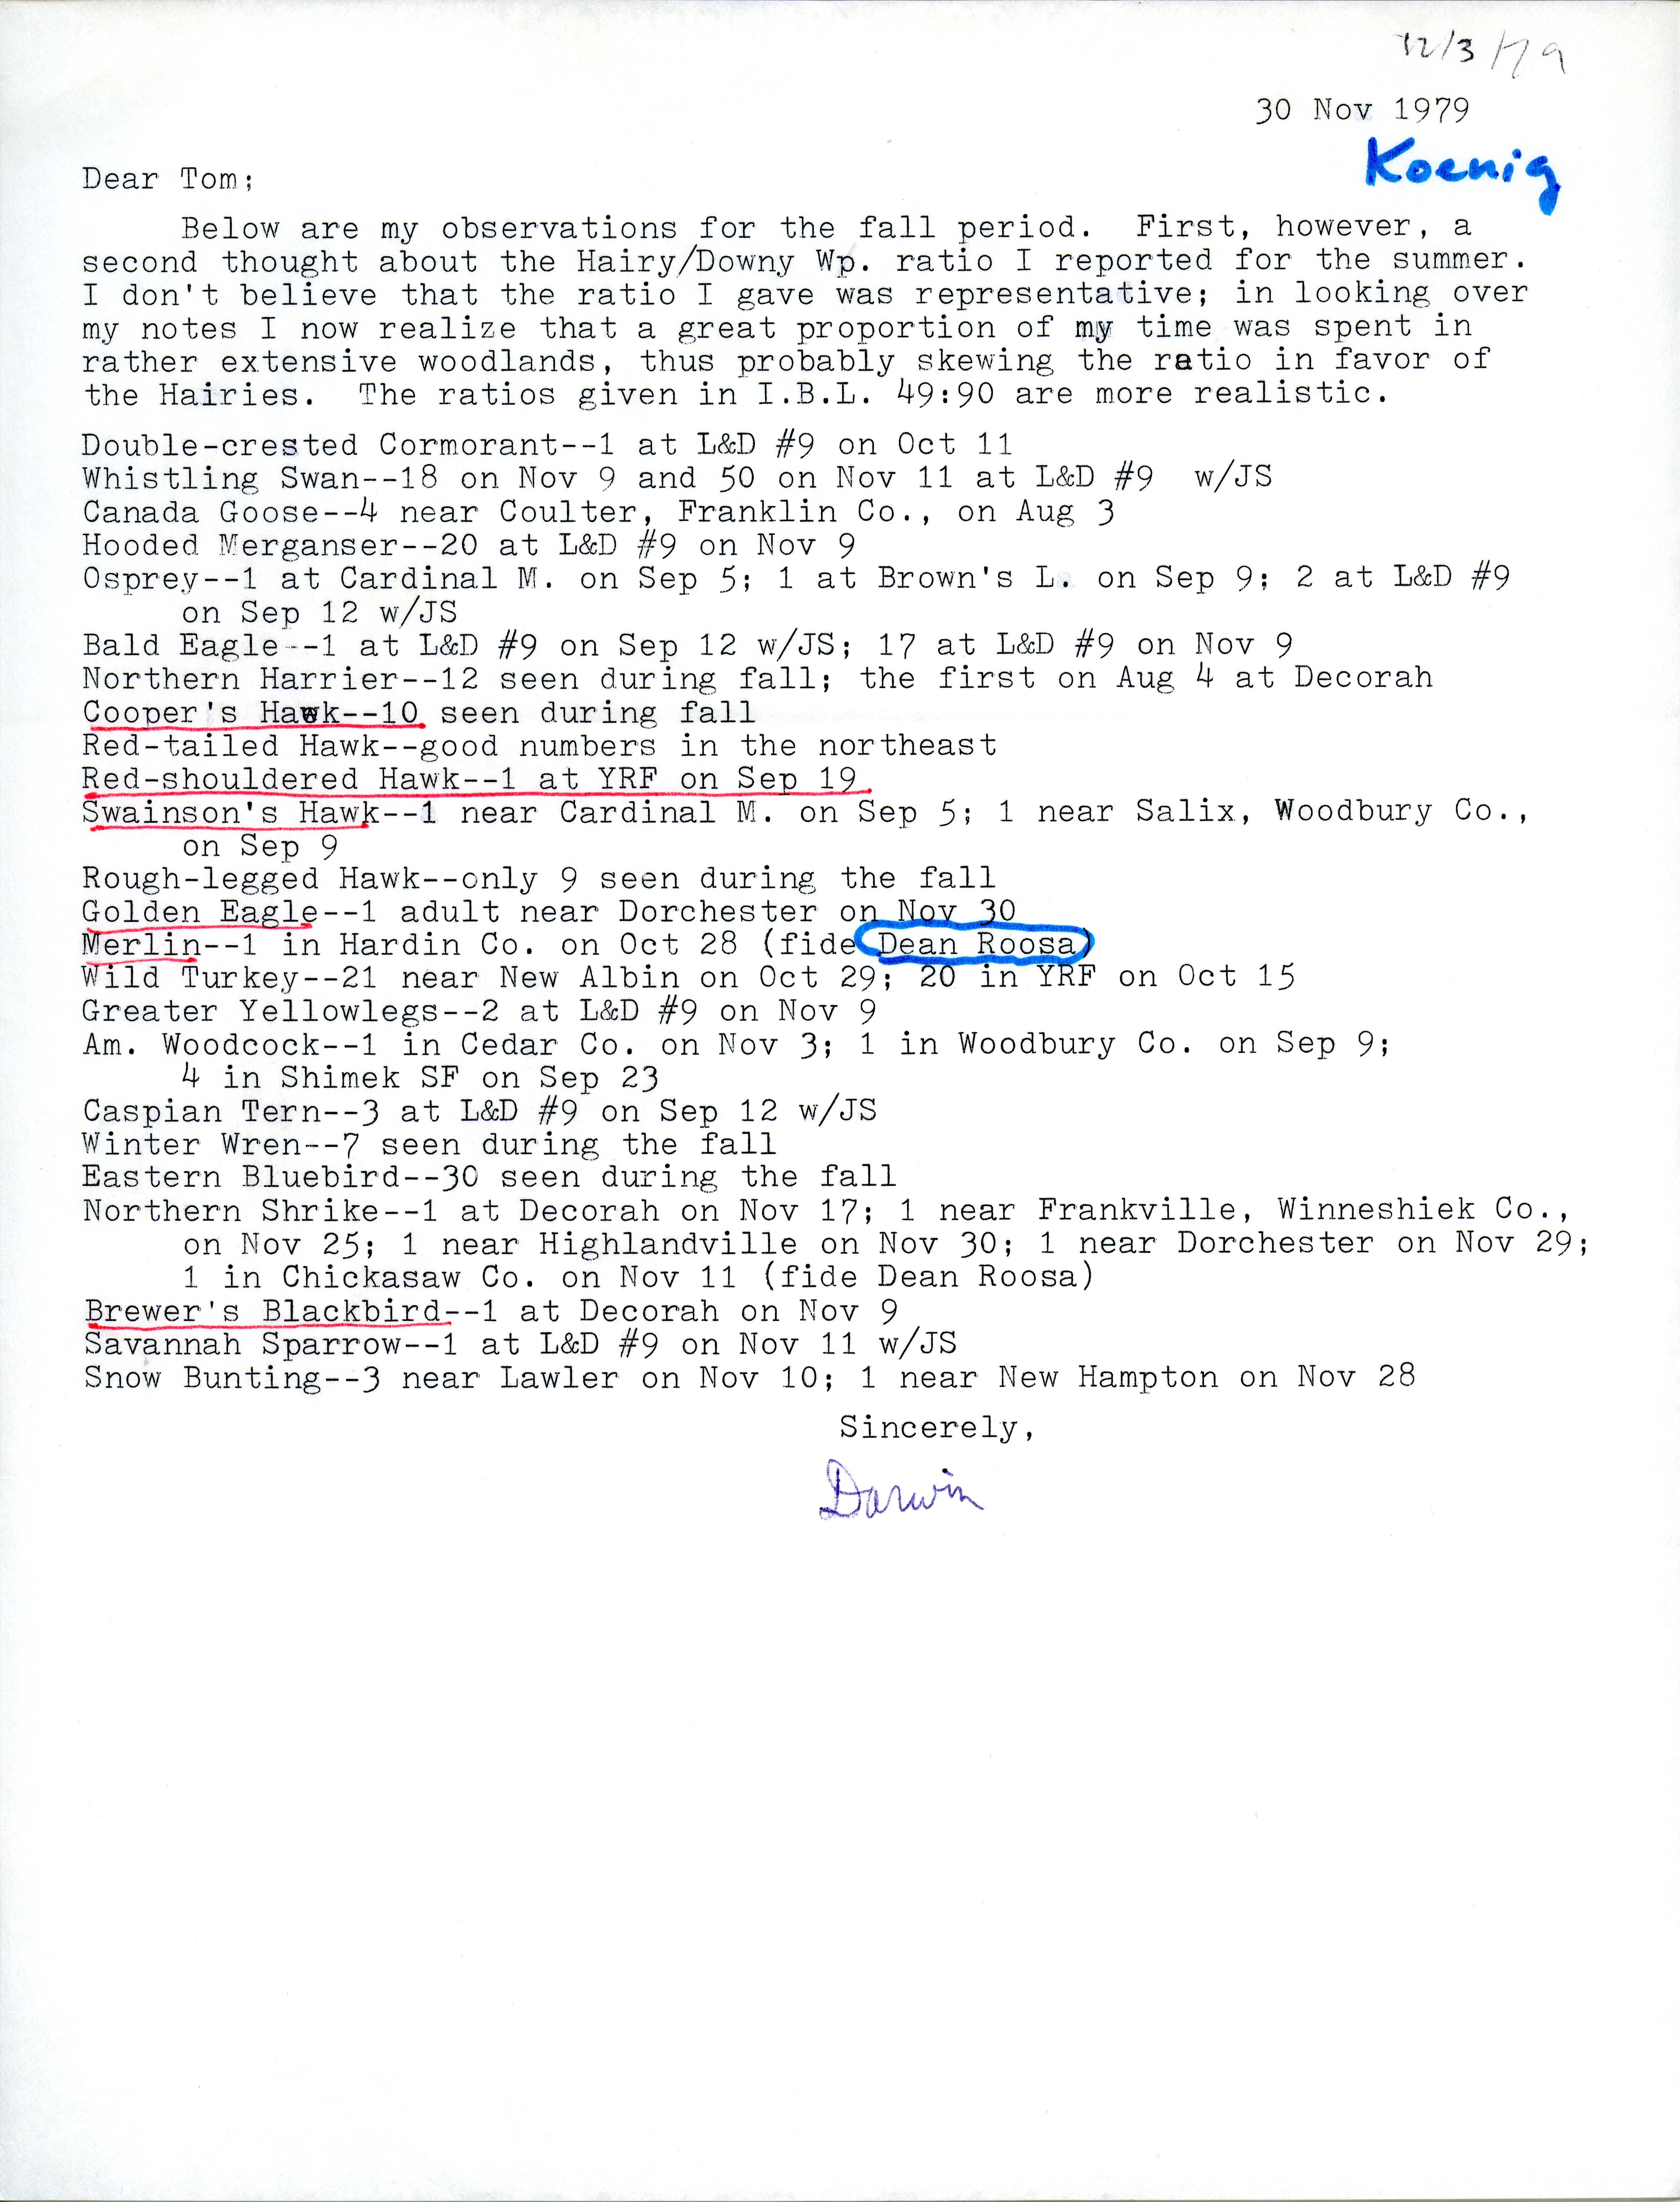 Darwin Koenig letter to Thomas H. Kent regarding bird sightings, November 30, 1979